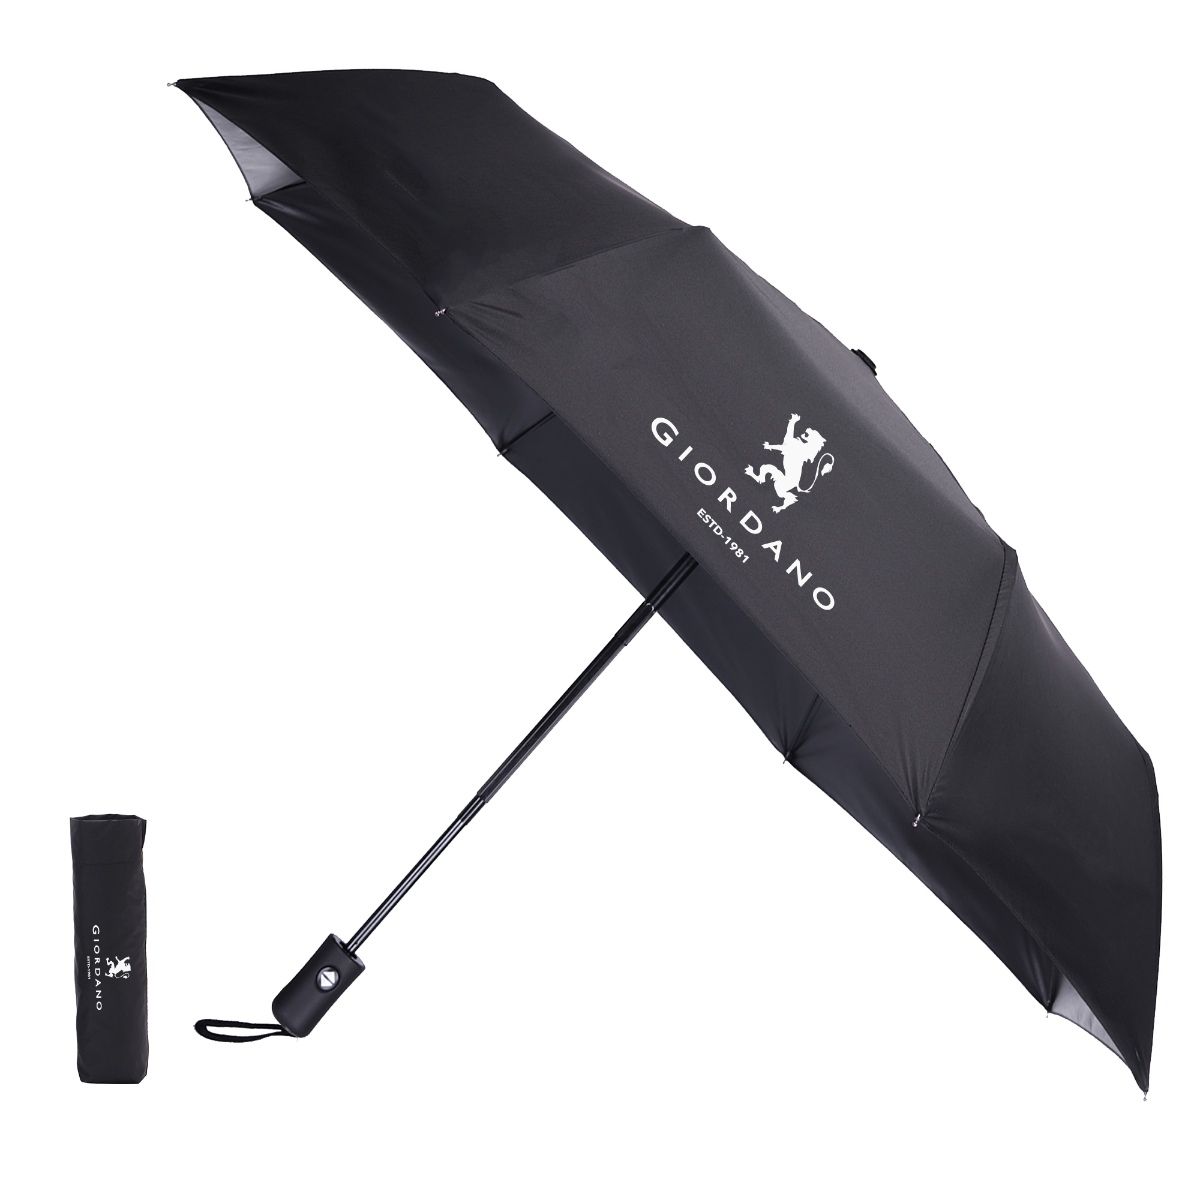 Giordano UV Protection Unisex Auto Open and Close Umbrella with Travel Sleeve - Regular Size